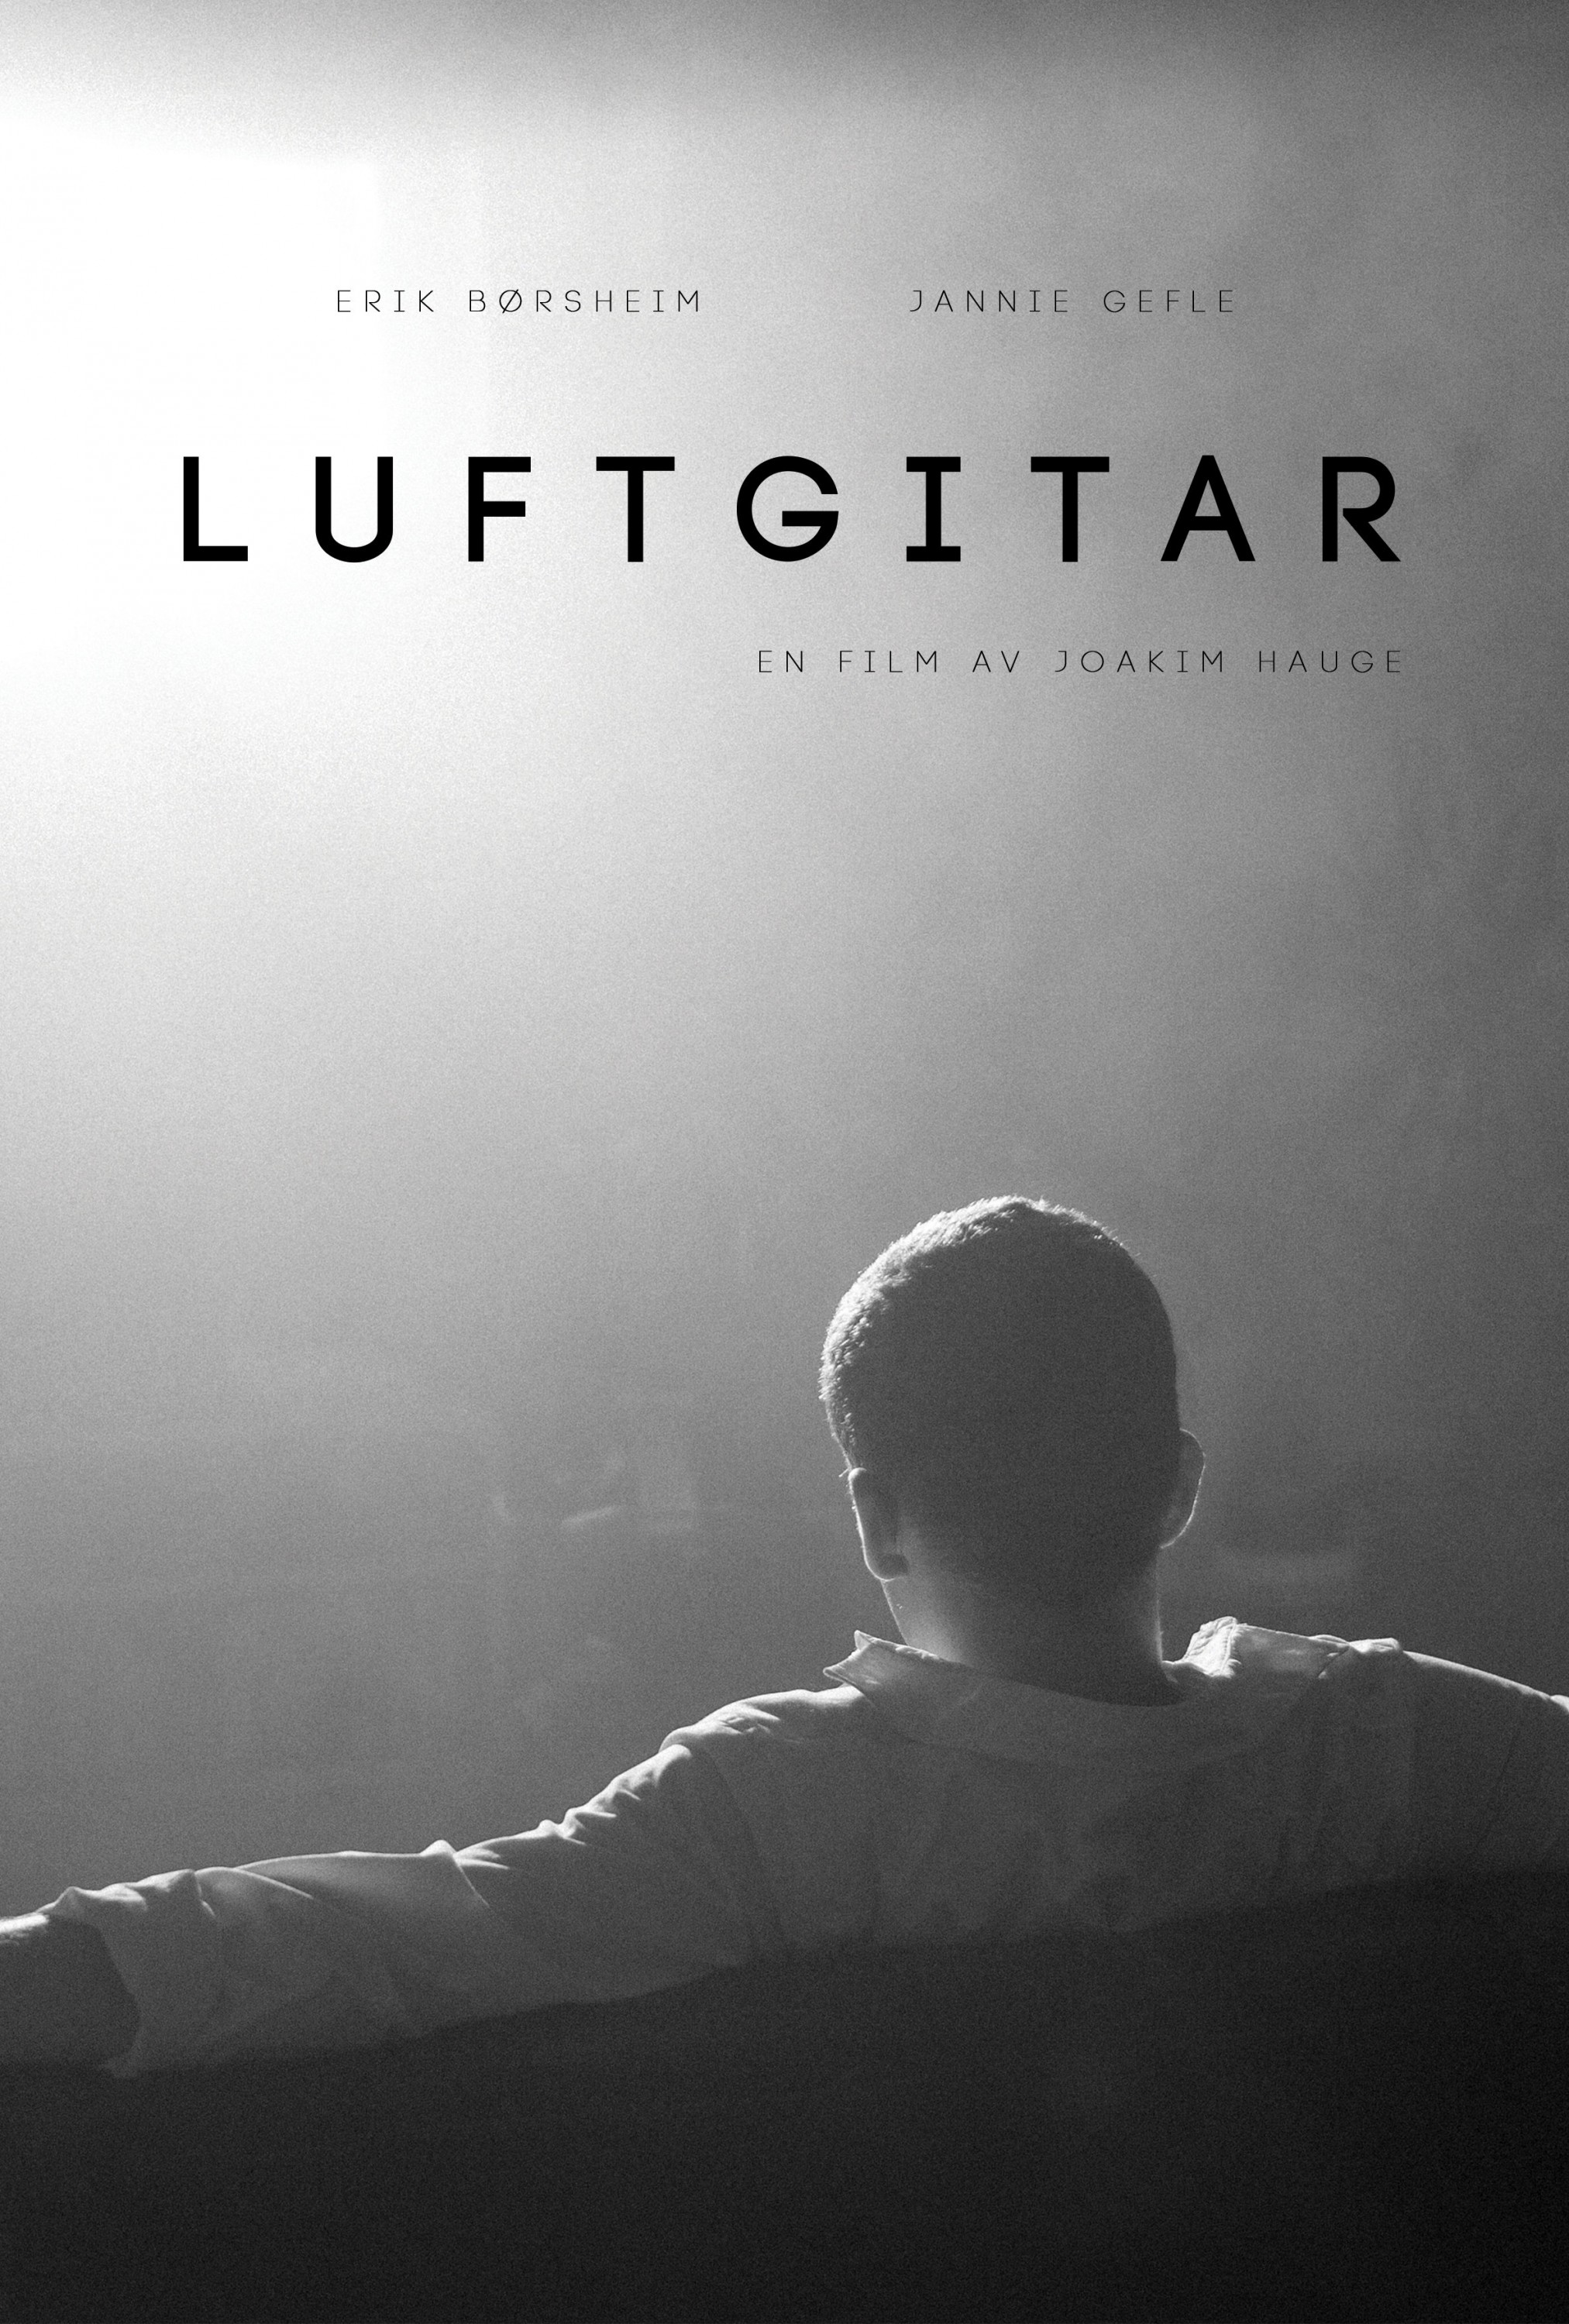 Mega Sized Movie Poster Image for Luftgitar